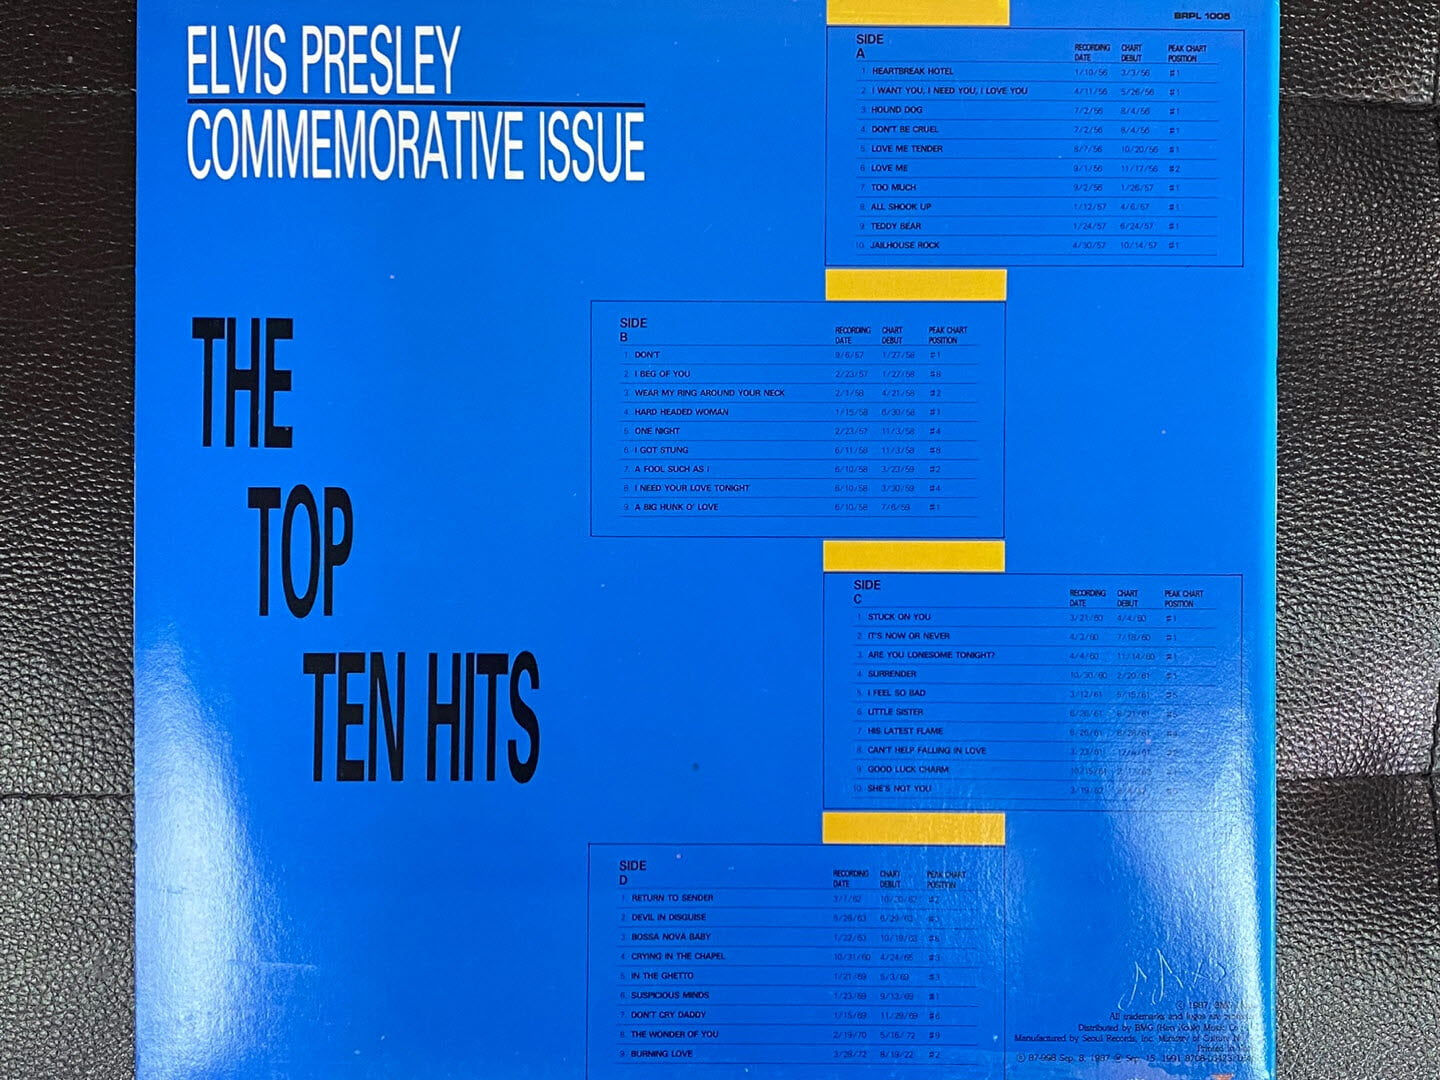 [LP] 엘비스 프레슬리 - Elvis Presley - The Top Ten Hits 2Lps [서울-라이센스반]